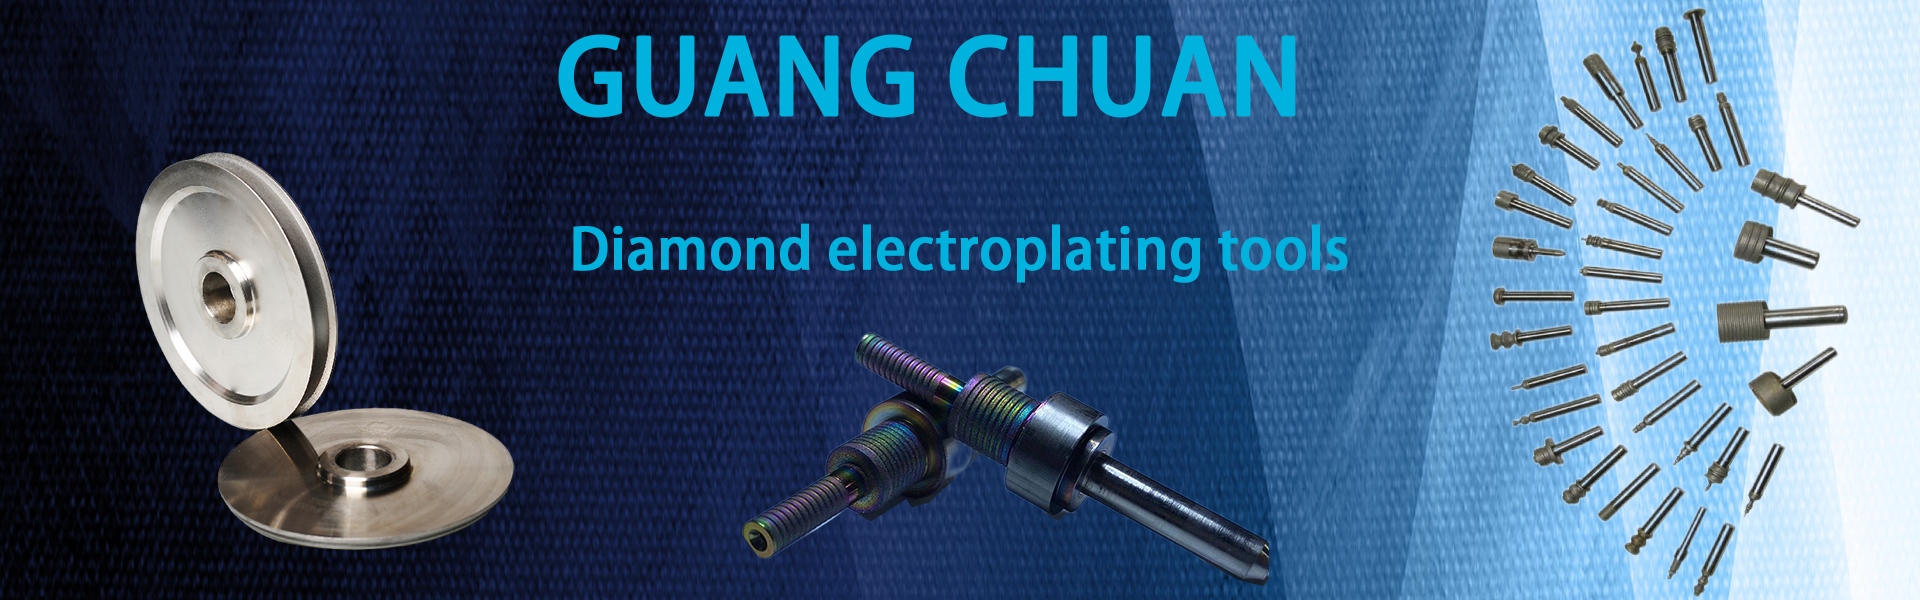 Ruote di macinazione diamantate, strumento diamante, punte da trapano,Dongguan Guangchuan Abrasives Technology Co., Ltd